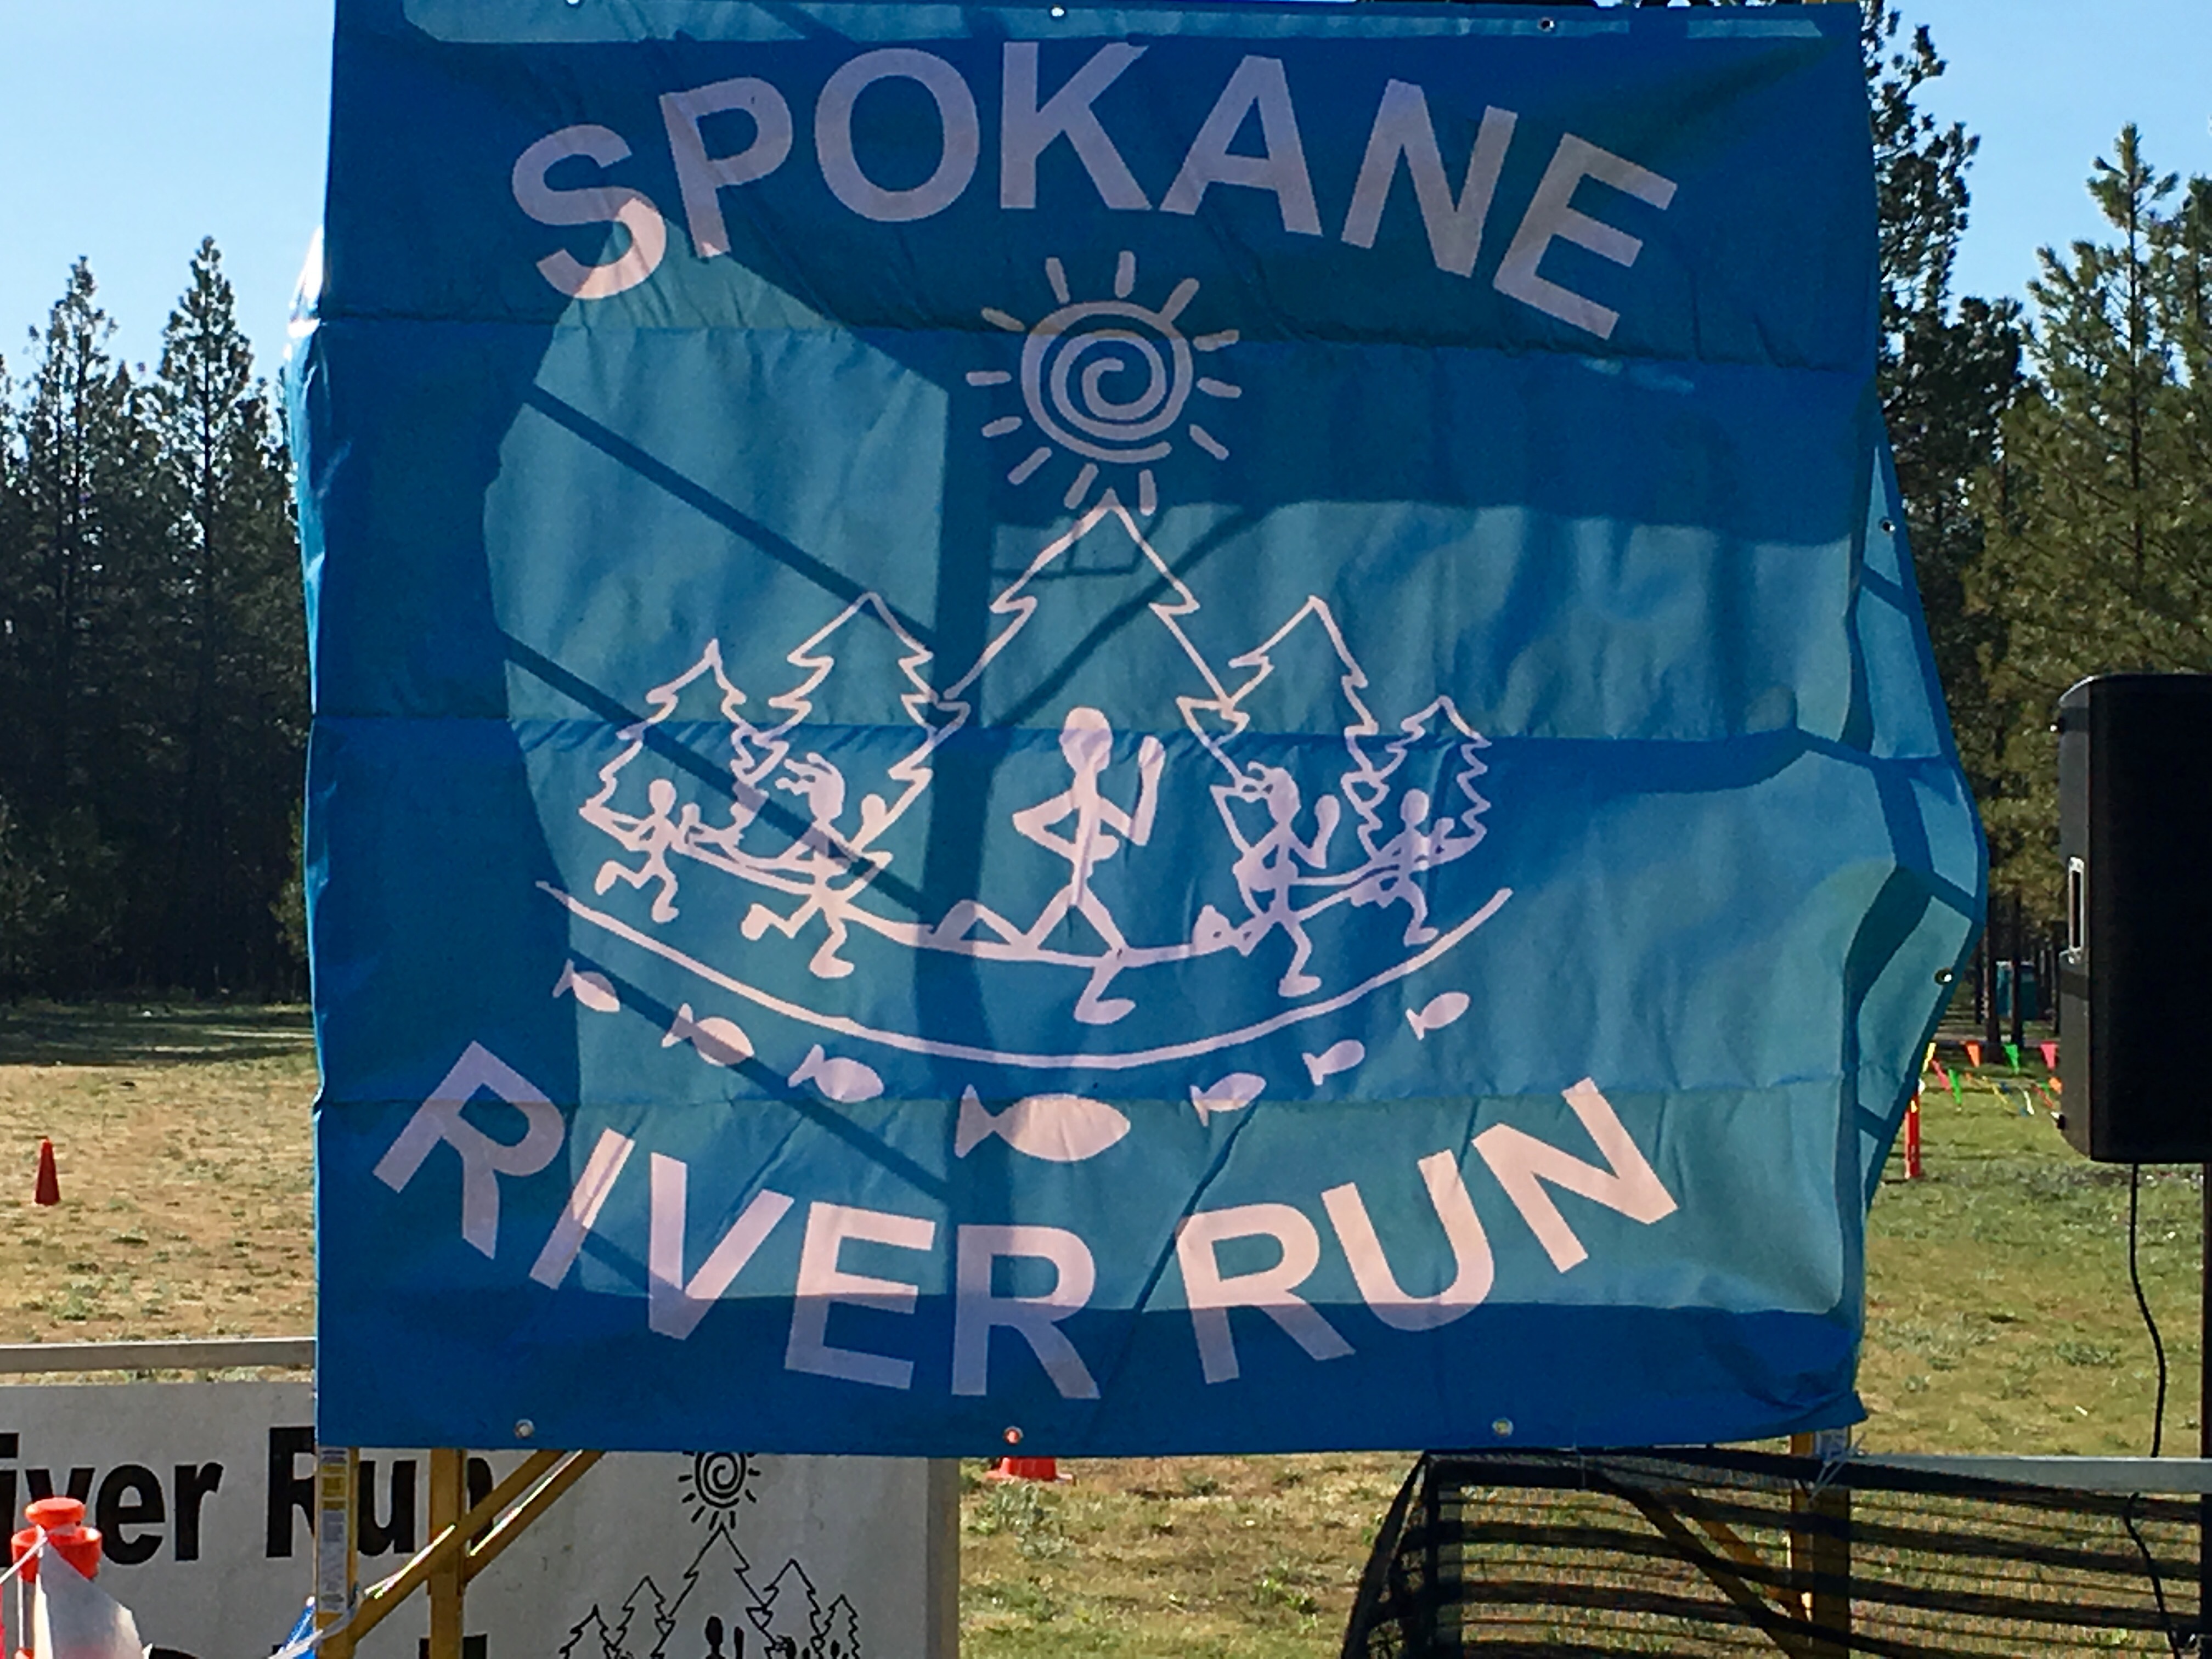 Spokane River Run Where to next 4 us?